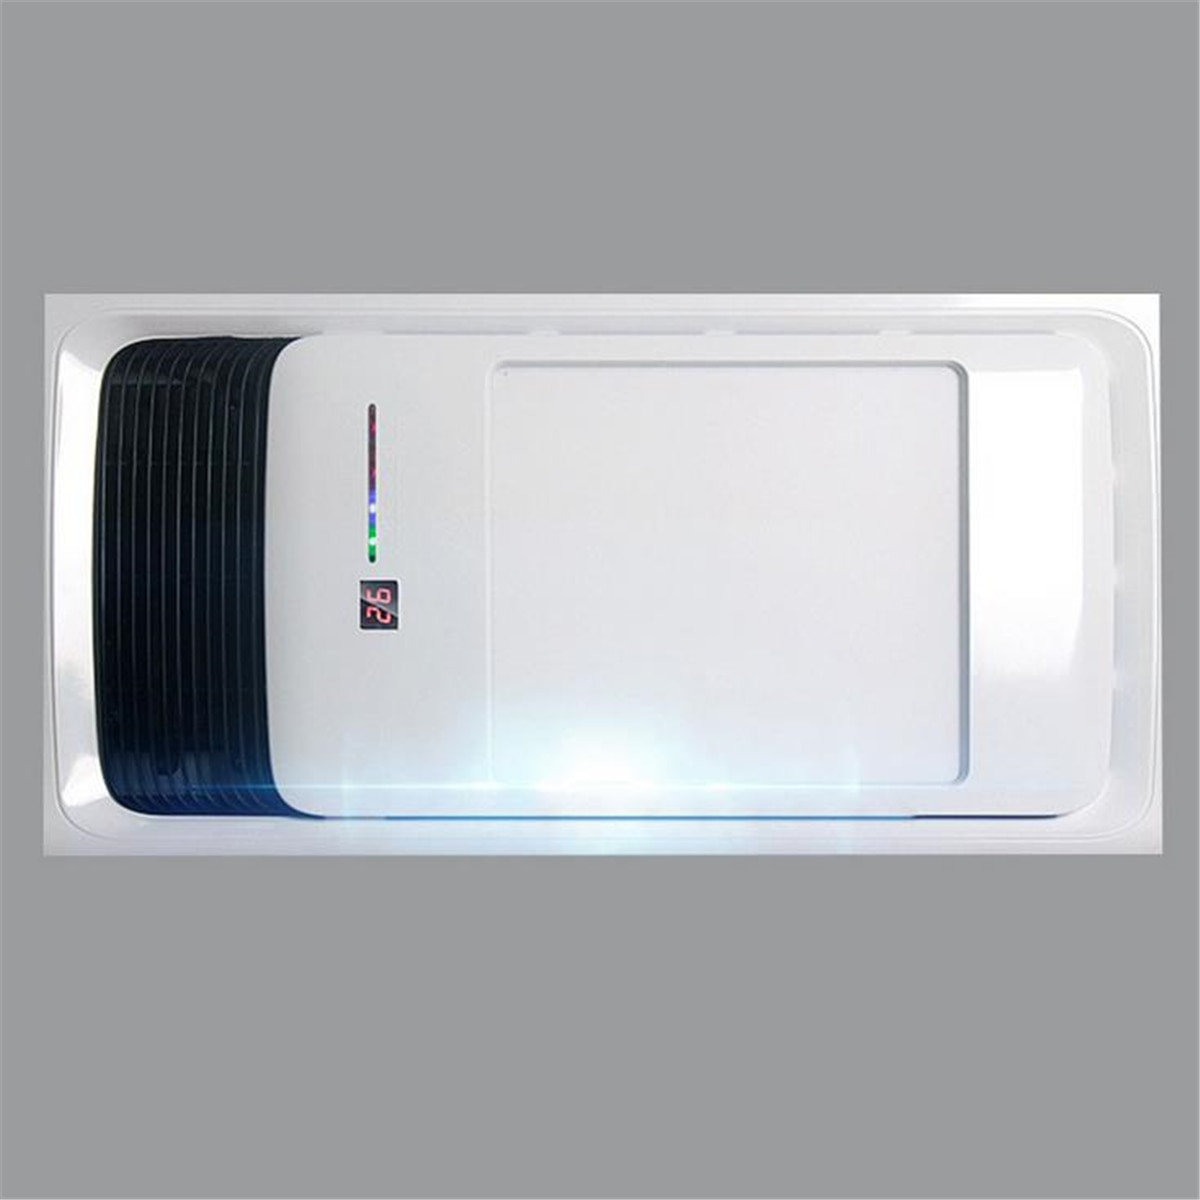 Electric Bathroom Heaters Wall Mounted
 Wall Mounted Bathroom Electric Heater Exhaust Fan Warmer